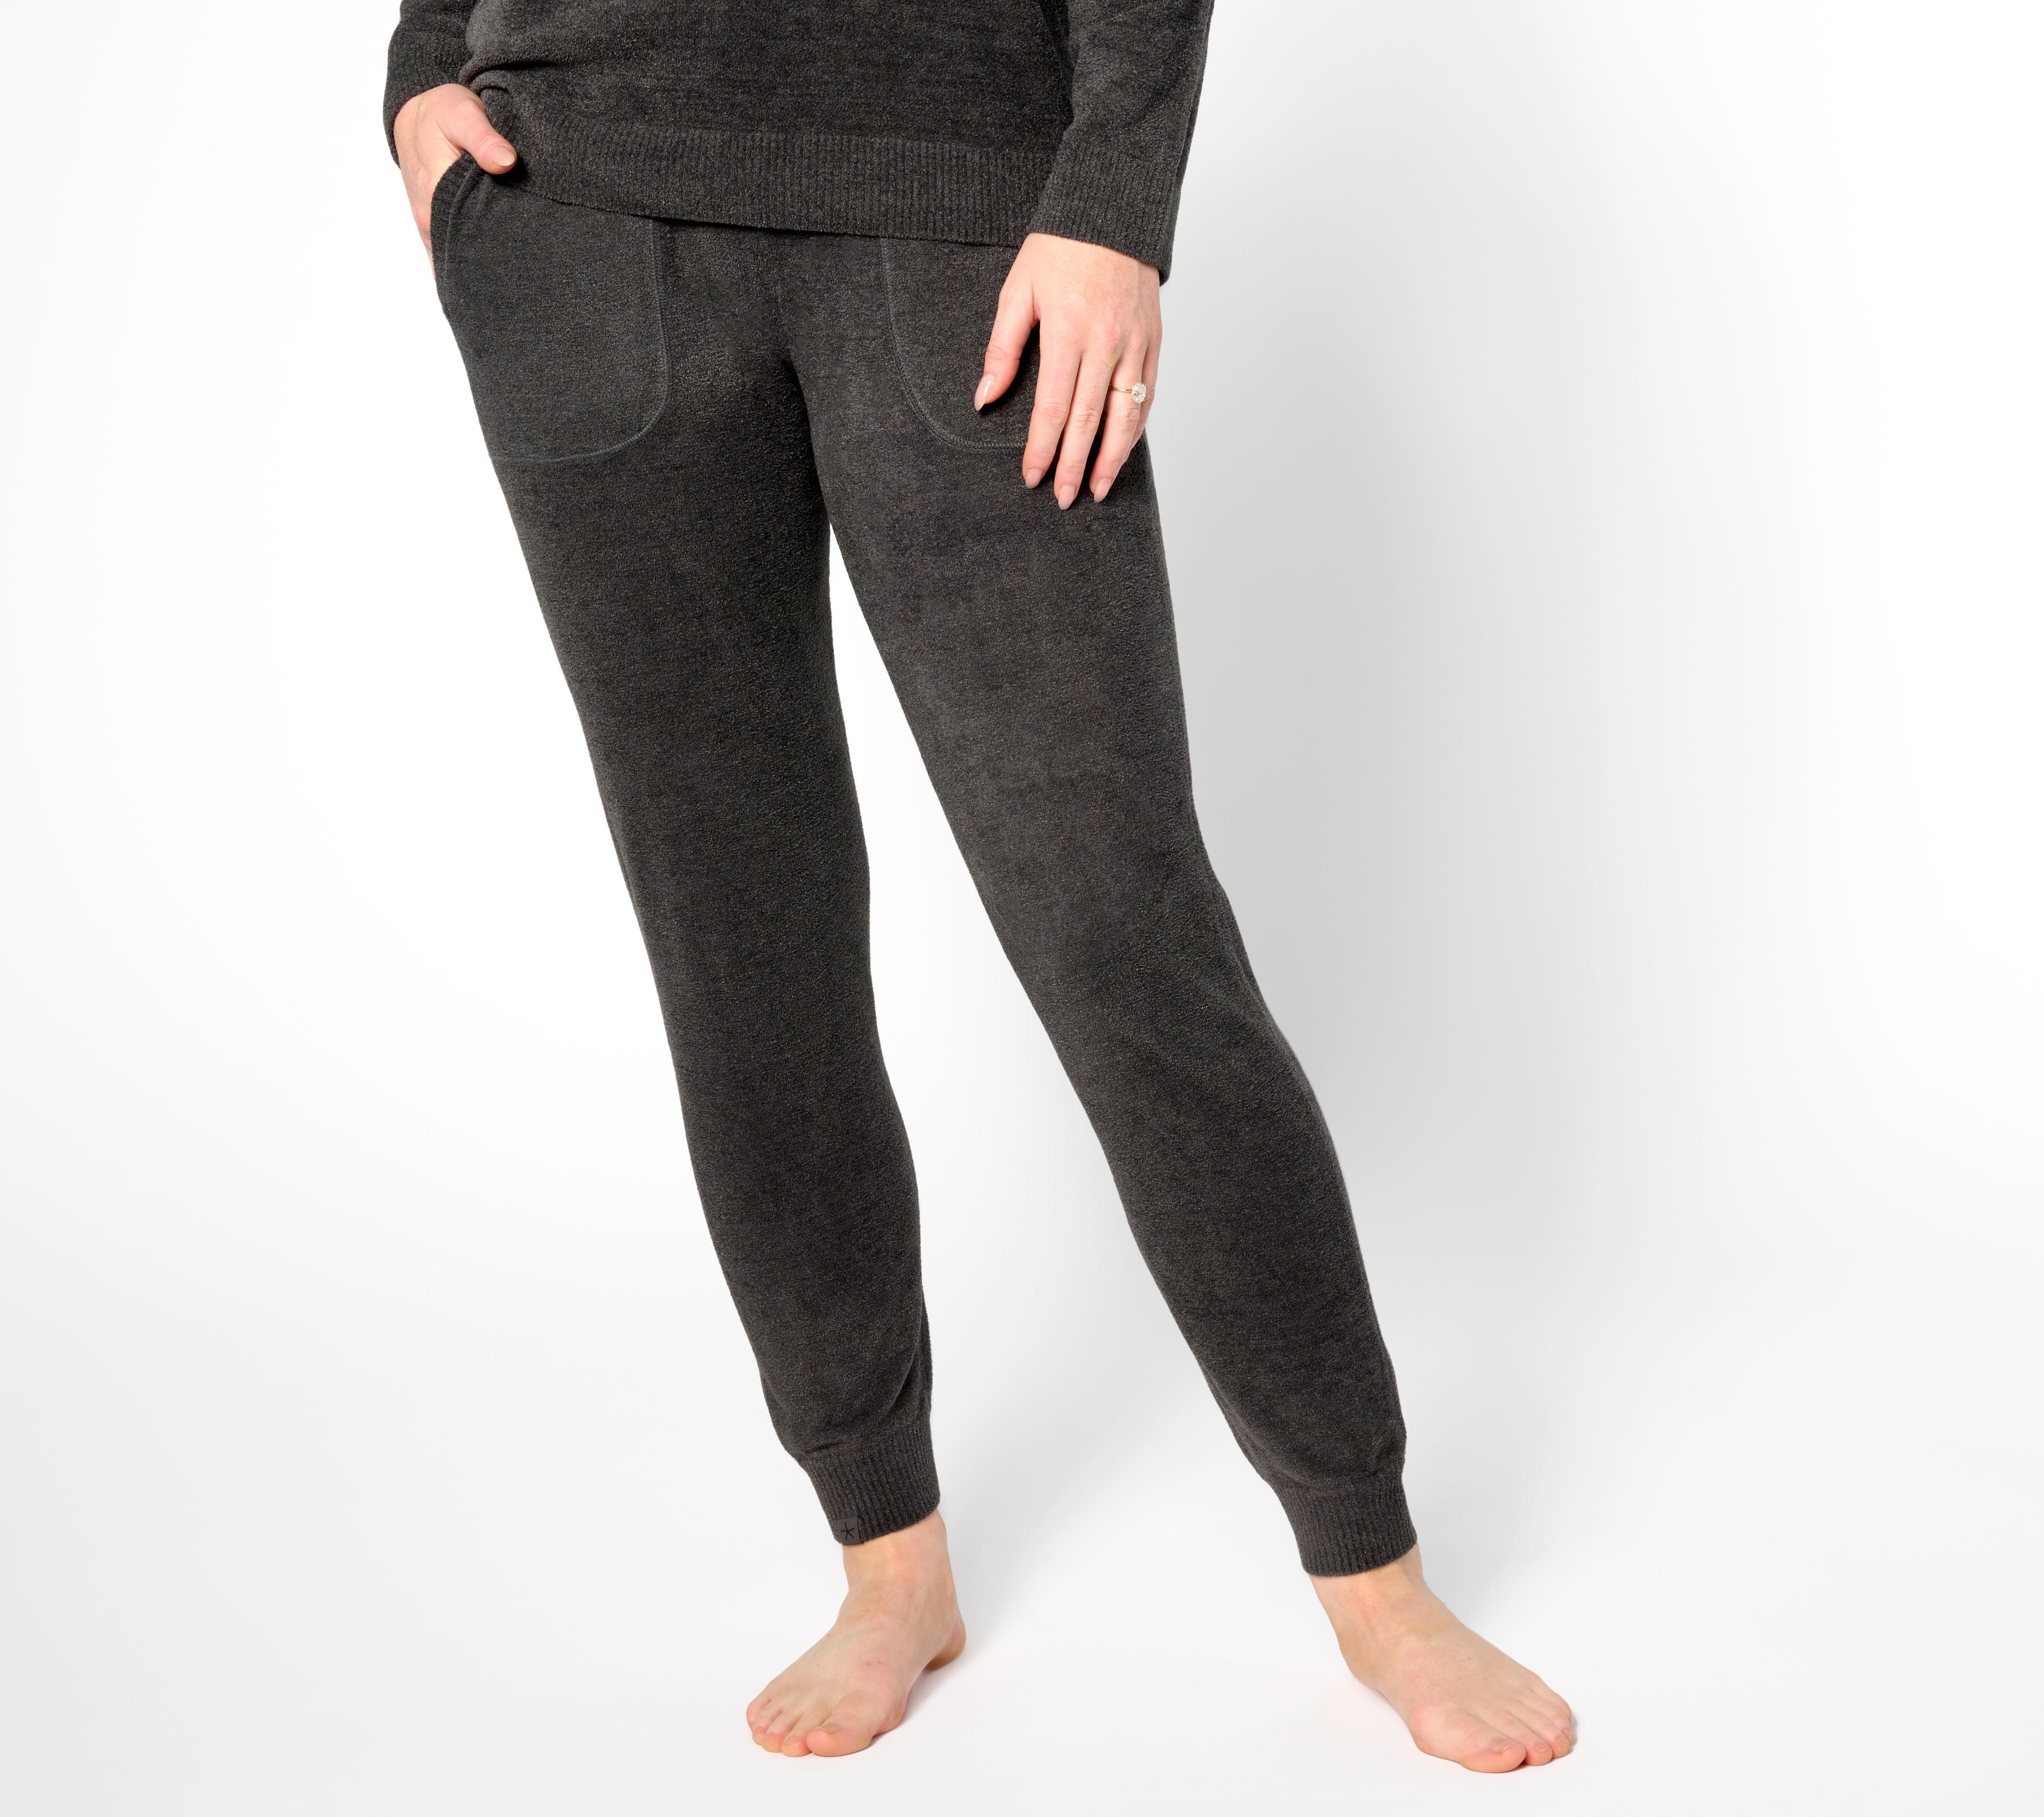 Tuff Athletics Women's Ultra Soft High Waist Yoga Legging Pants Choose Your  Size